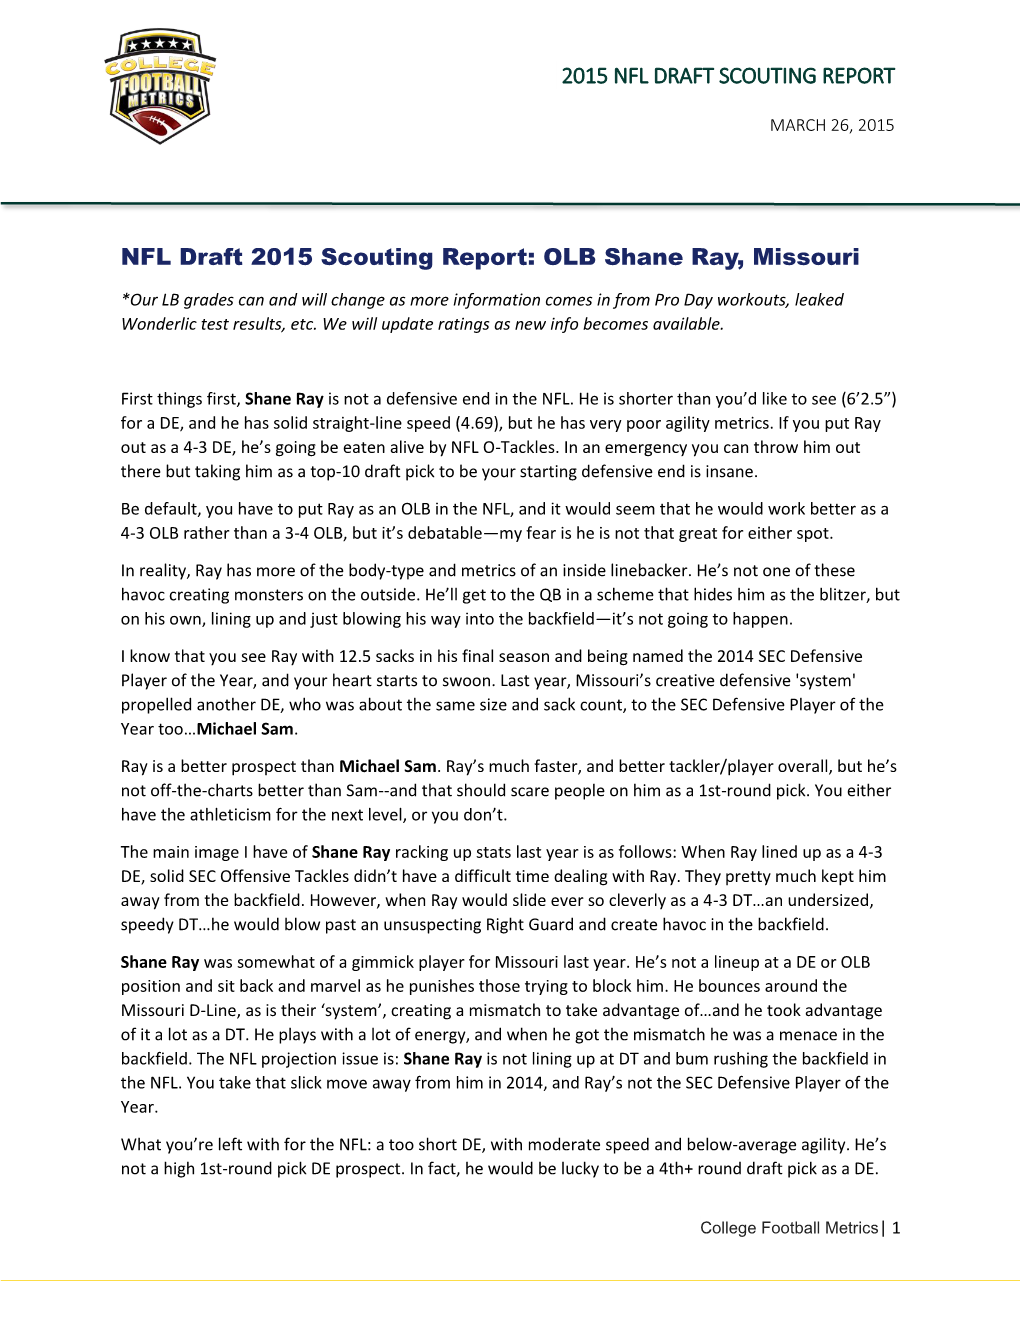 NFL Draft 2015 Scouting Report: OLB Shane Ray, Missouri